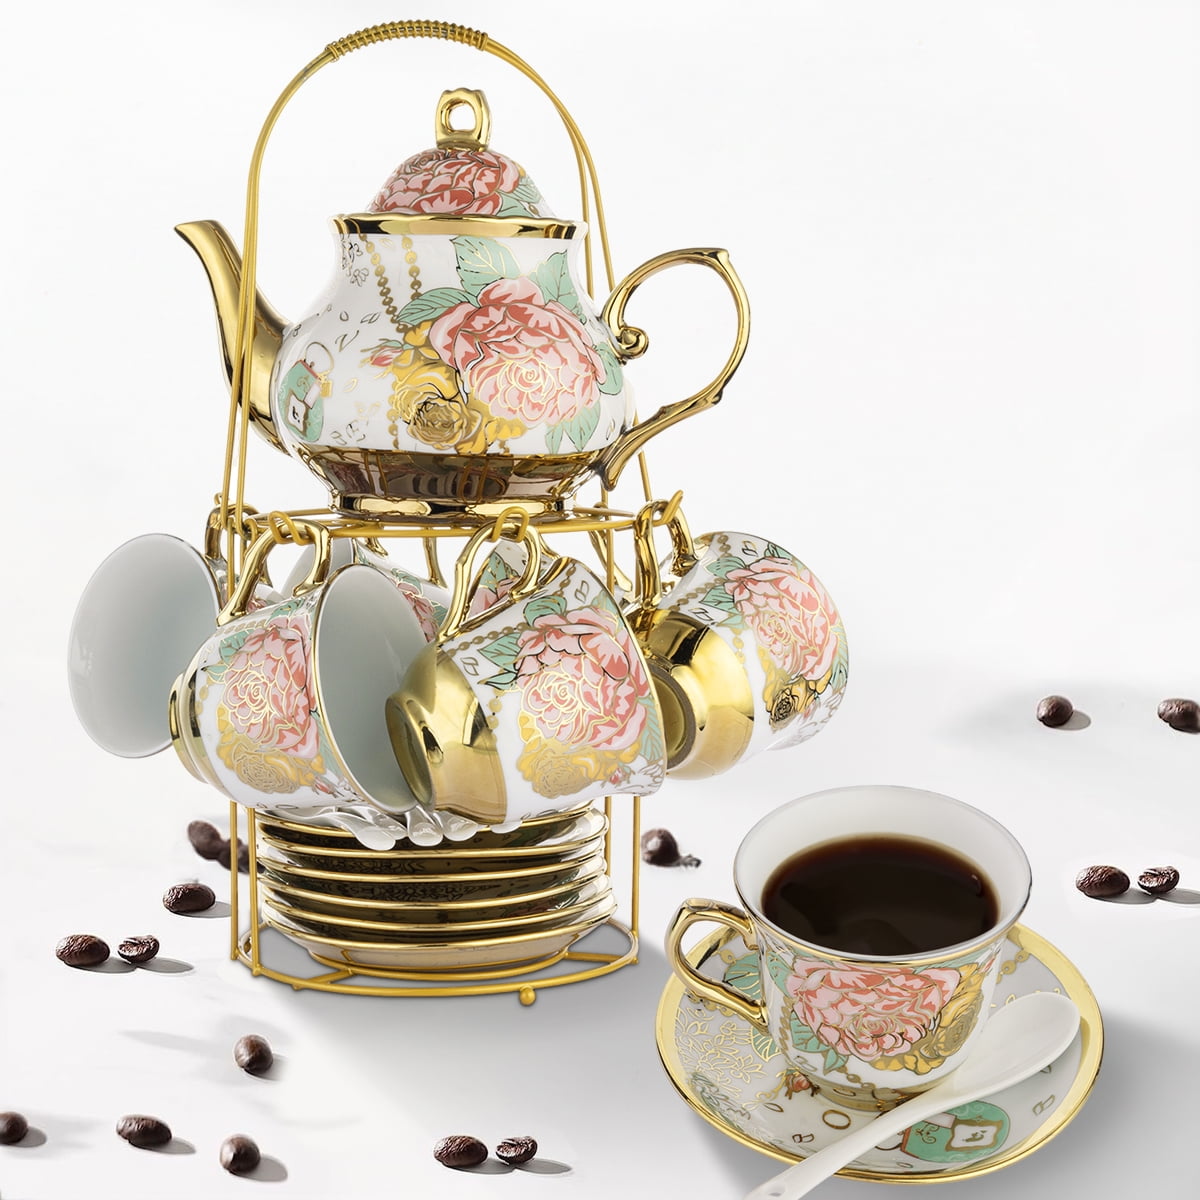 20 Pcs Ceramic Coffee Mugs Set, Luxury British Style Tea Cup Set - 6 Cups/3 fl.oz, 6 Saucers, 6 Spoons, 1 Tea Pot/15 fl.oz, 1 Stand Rack, Gold, S